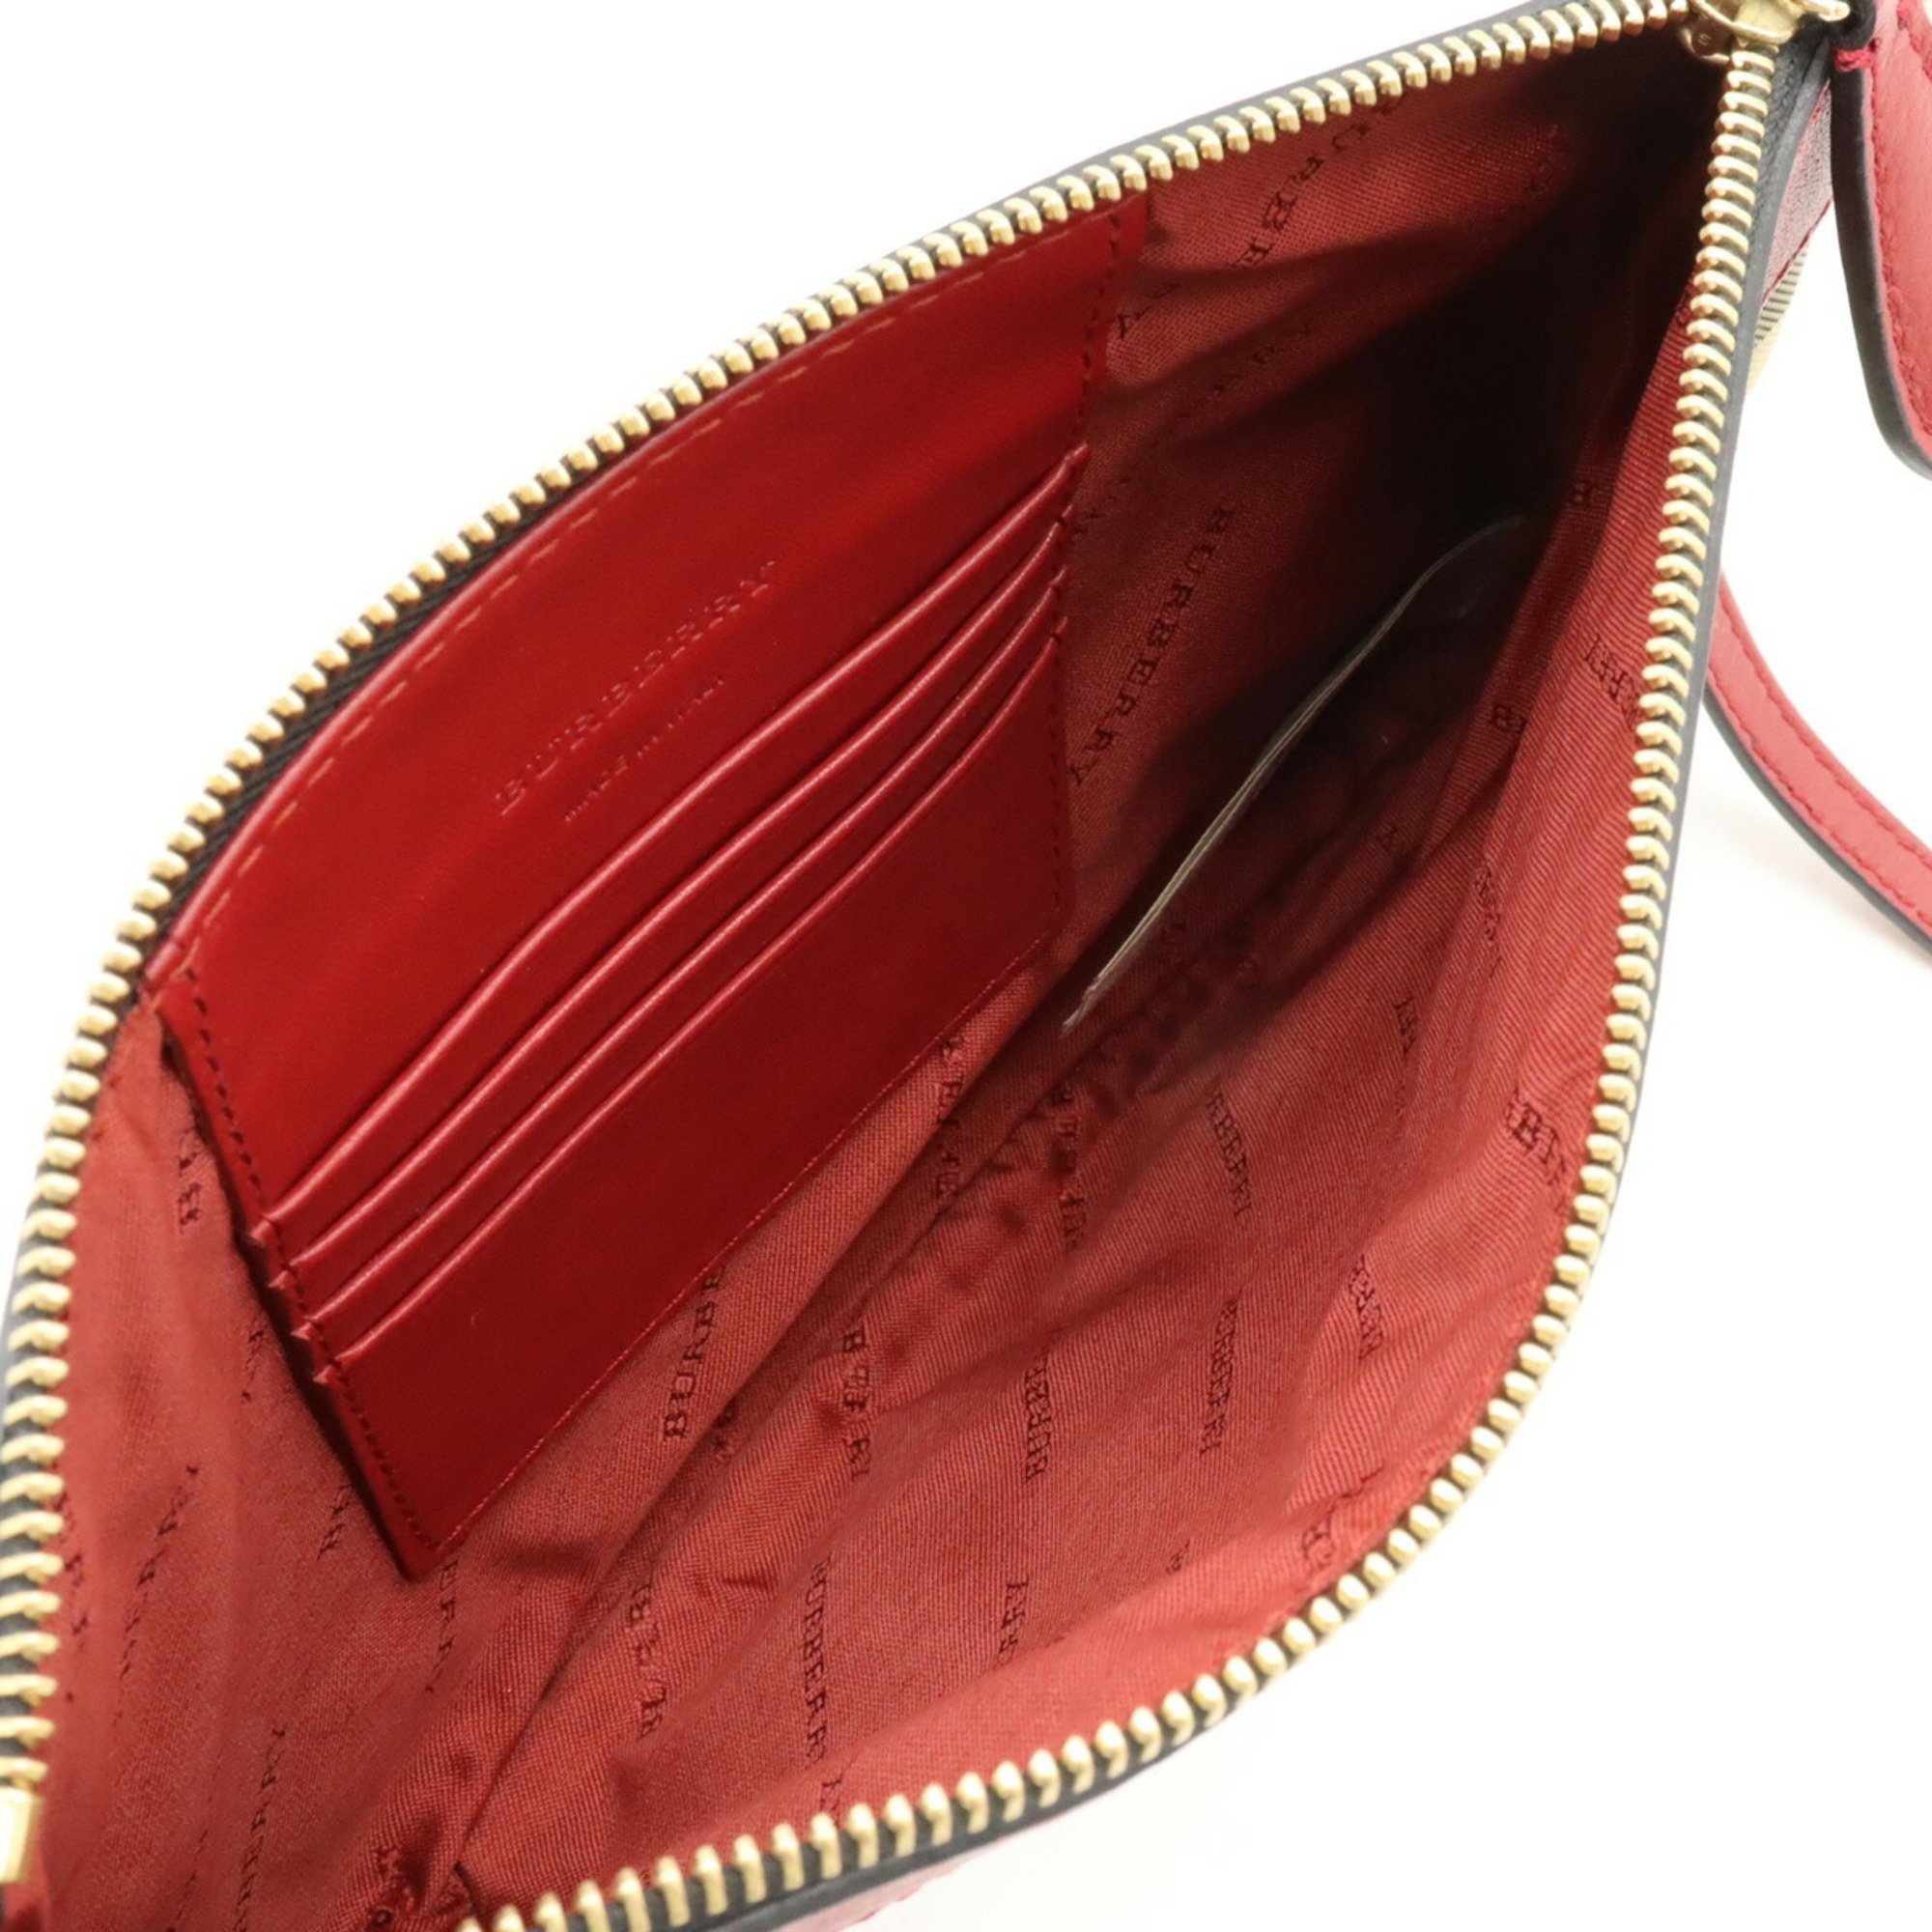 BURBERRY Nova Check Shoulder Bag Pochette Clutch Nylon Canvas Leather Beige Red